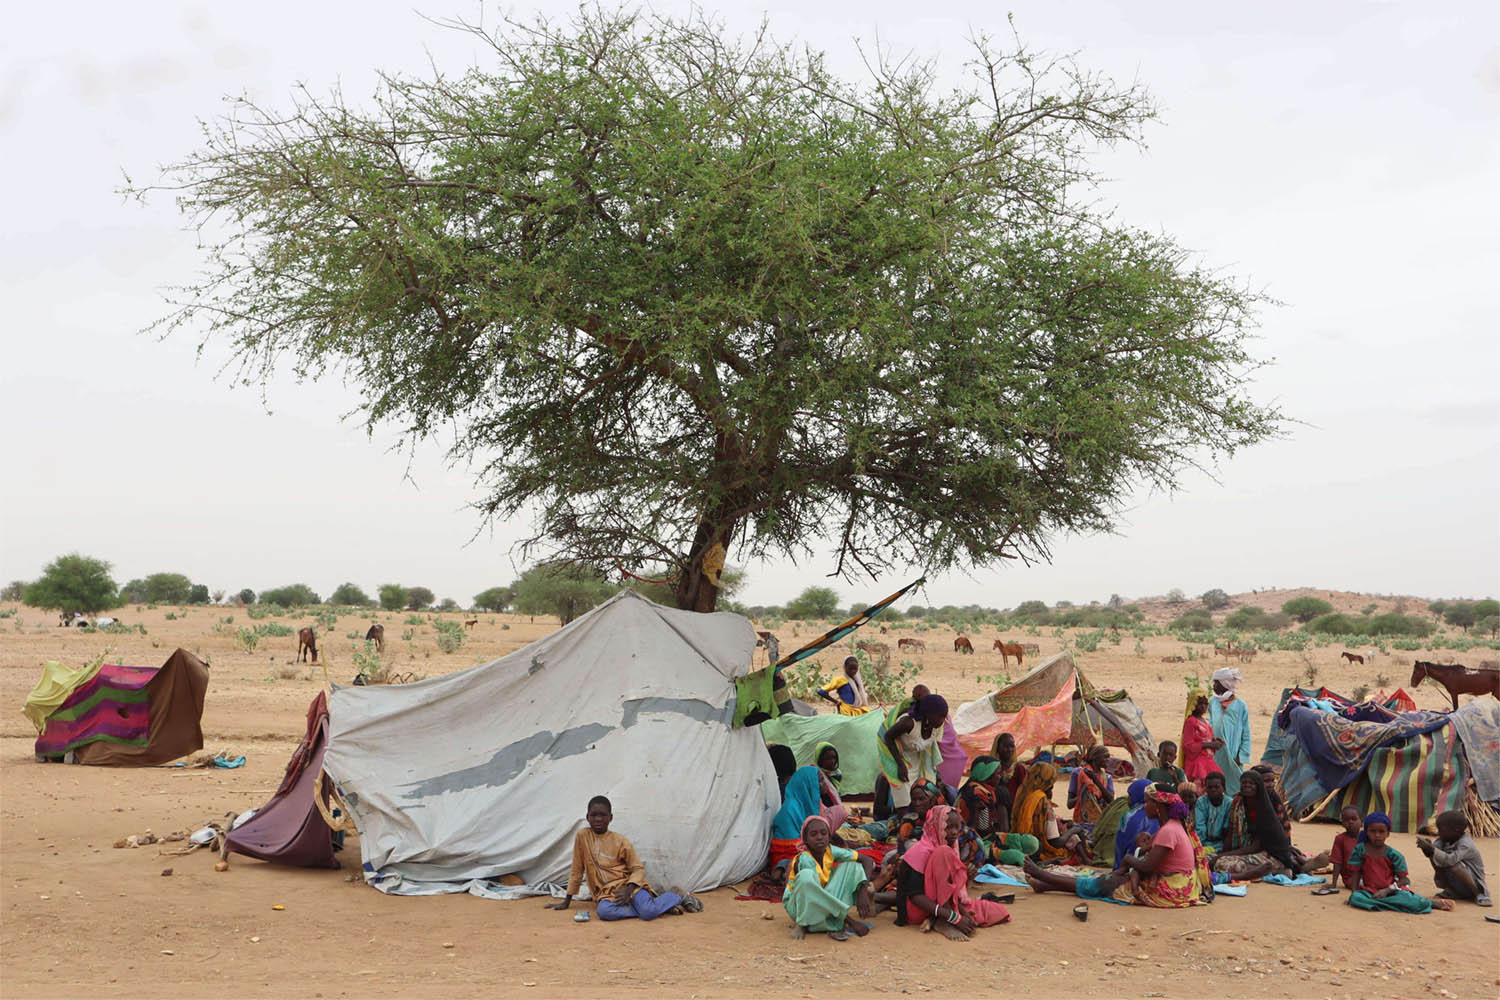 Sudan's crisis has unleashed a humanitarian disaster